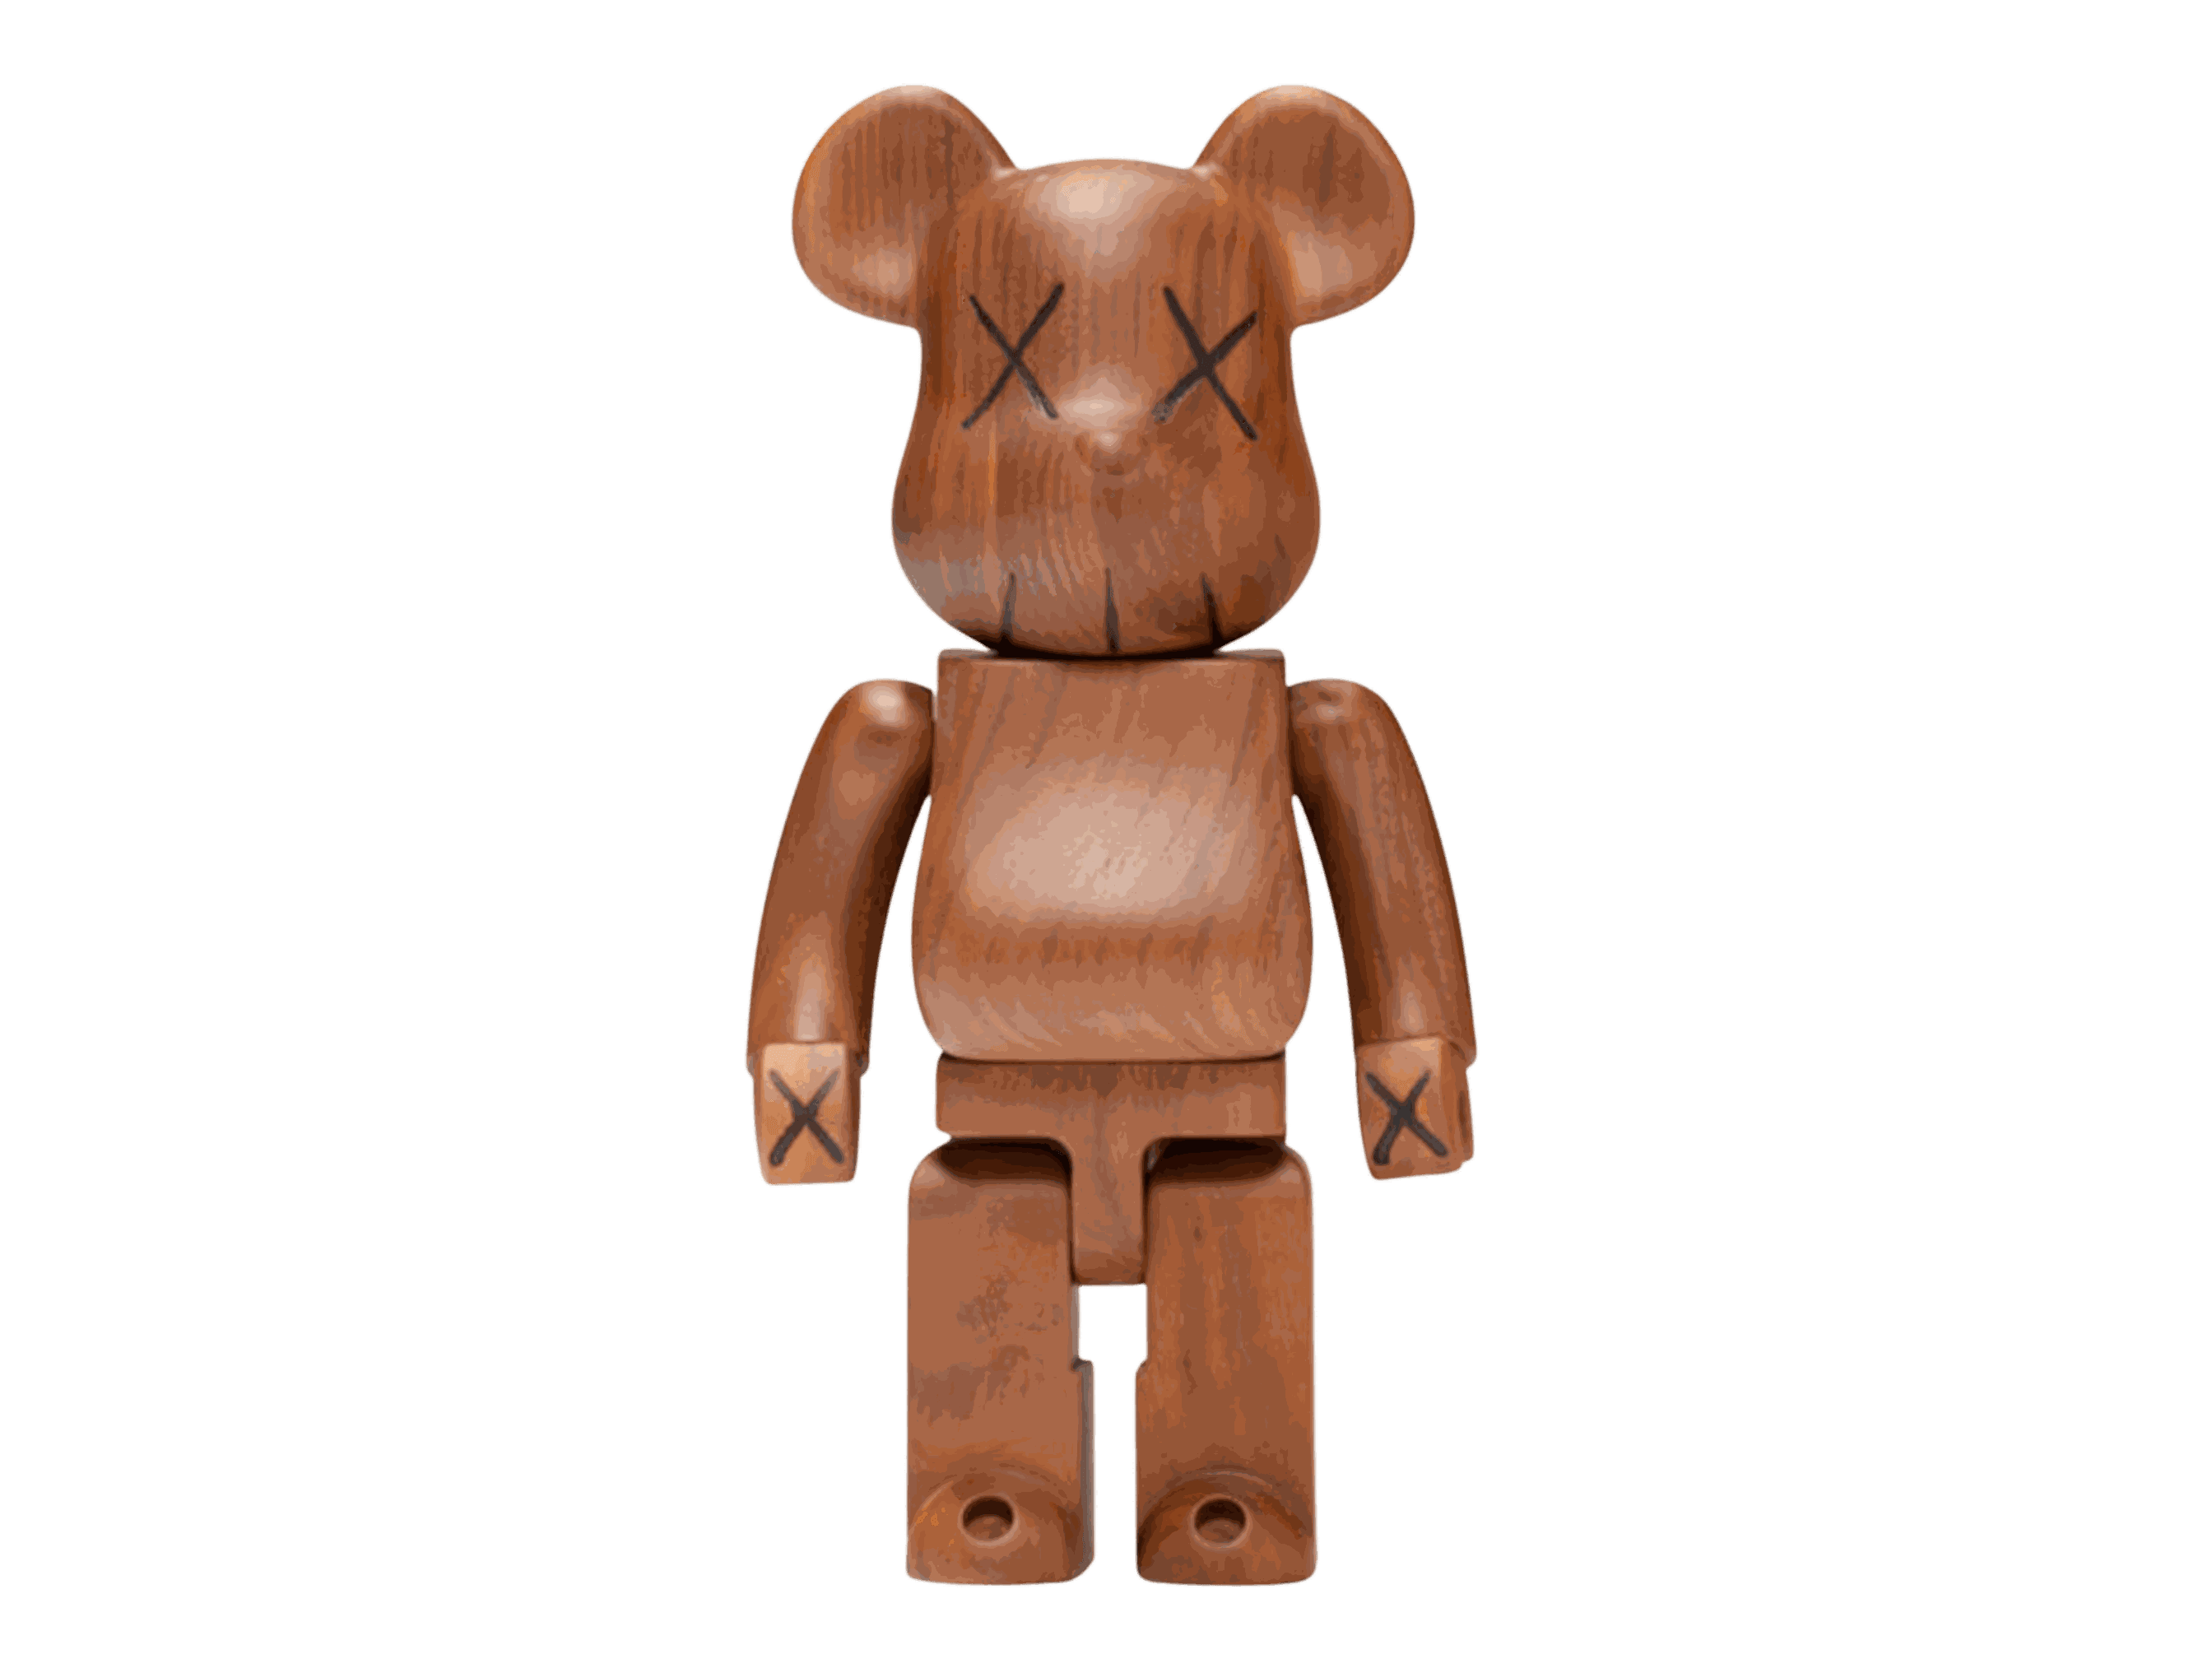 Bearbrick wood from 5Art Gallery